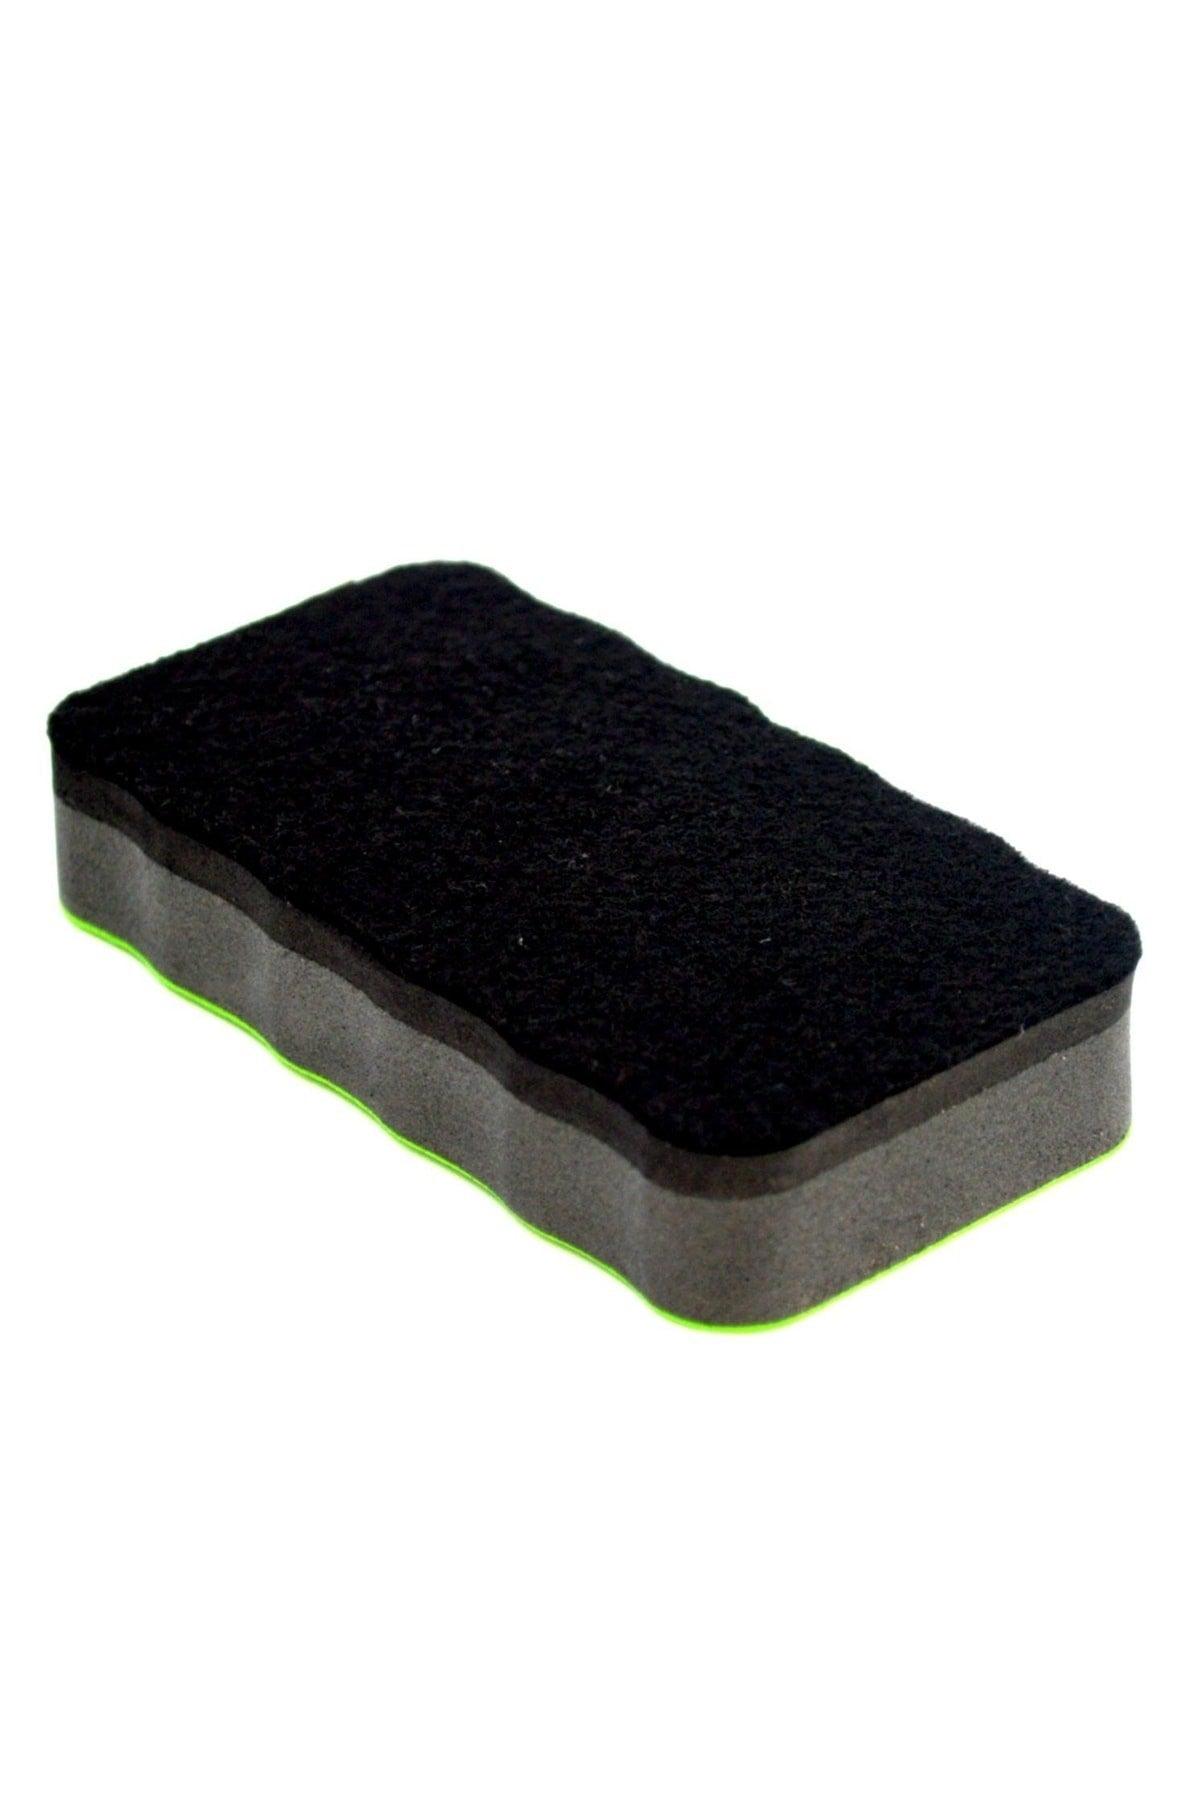 Magnetic Blackboard Eraser 1 Piece Green